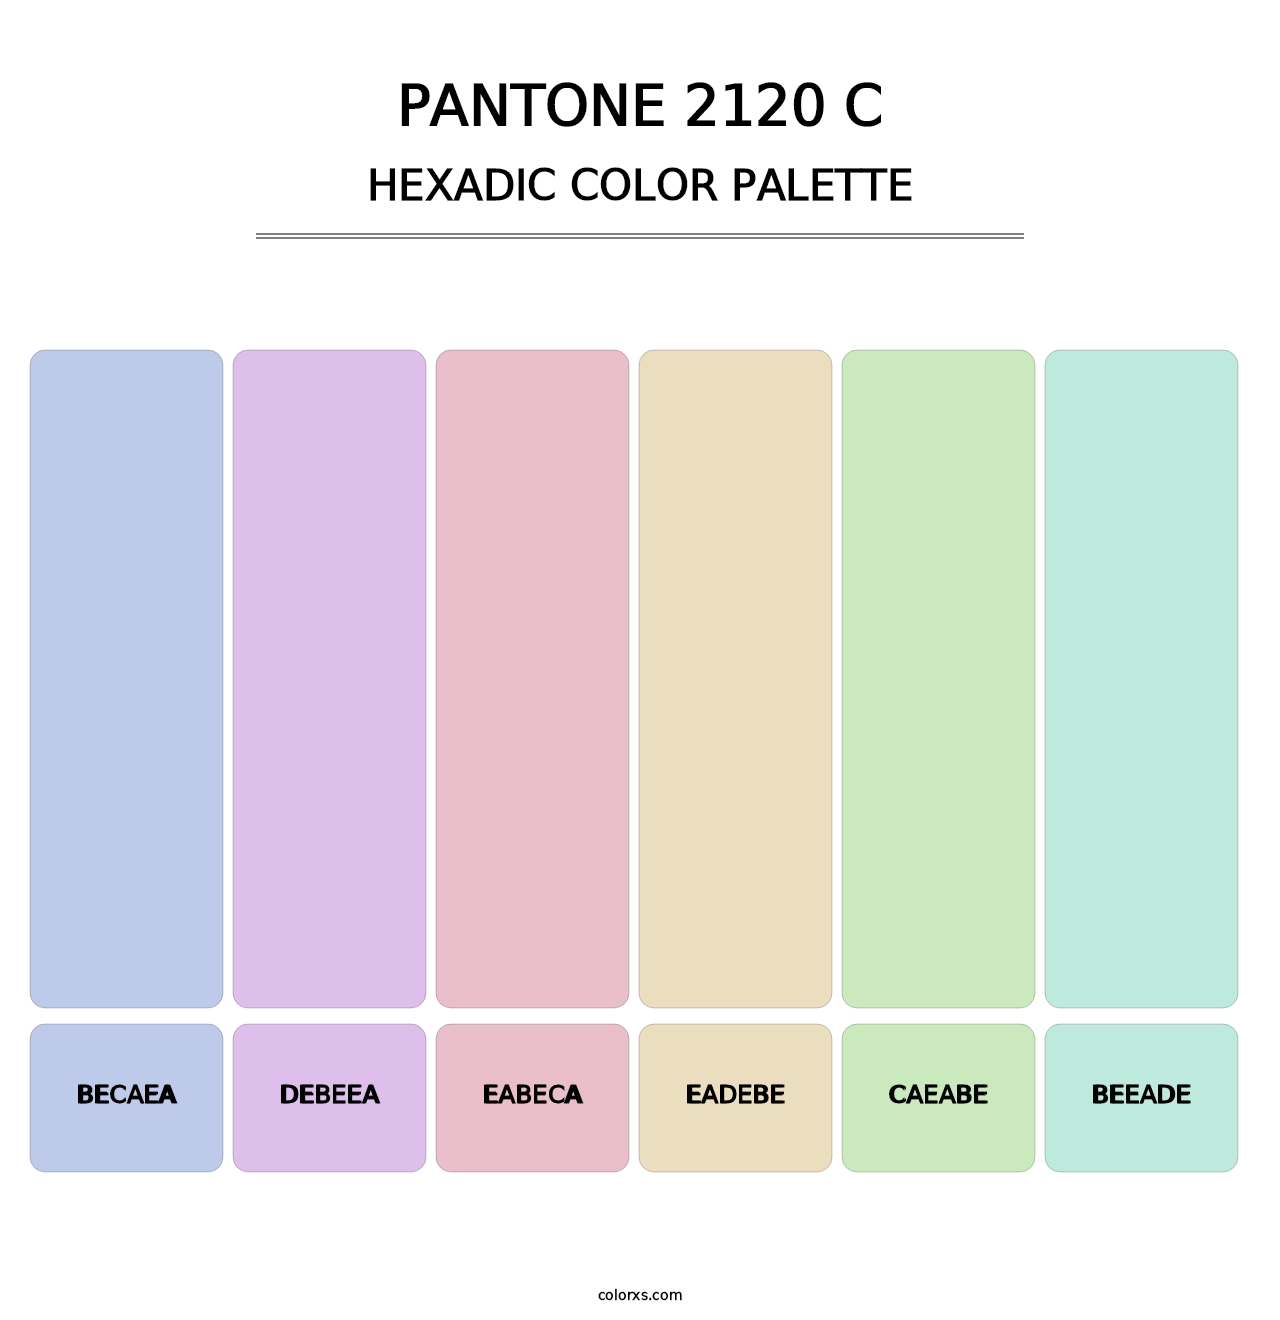 PANTONE 2120 C - Hexadic Color Palette